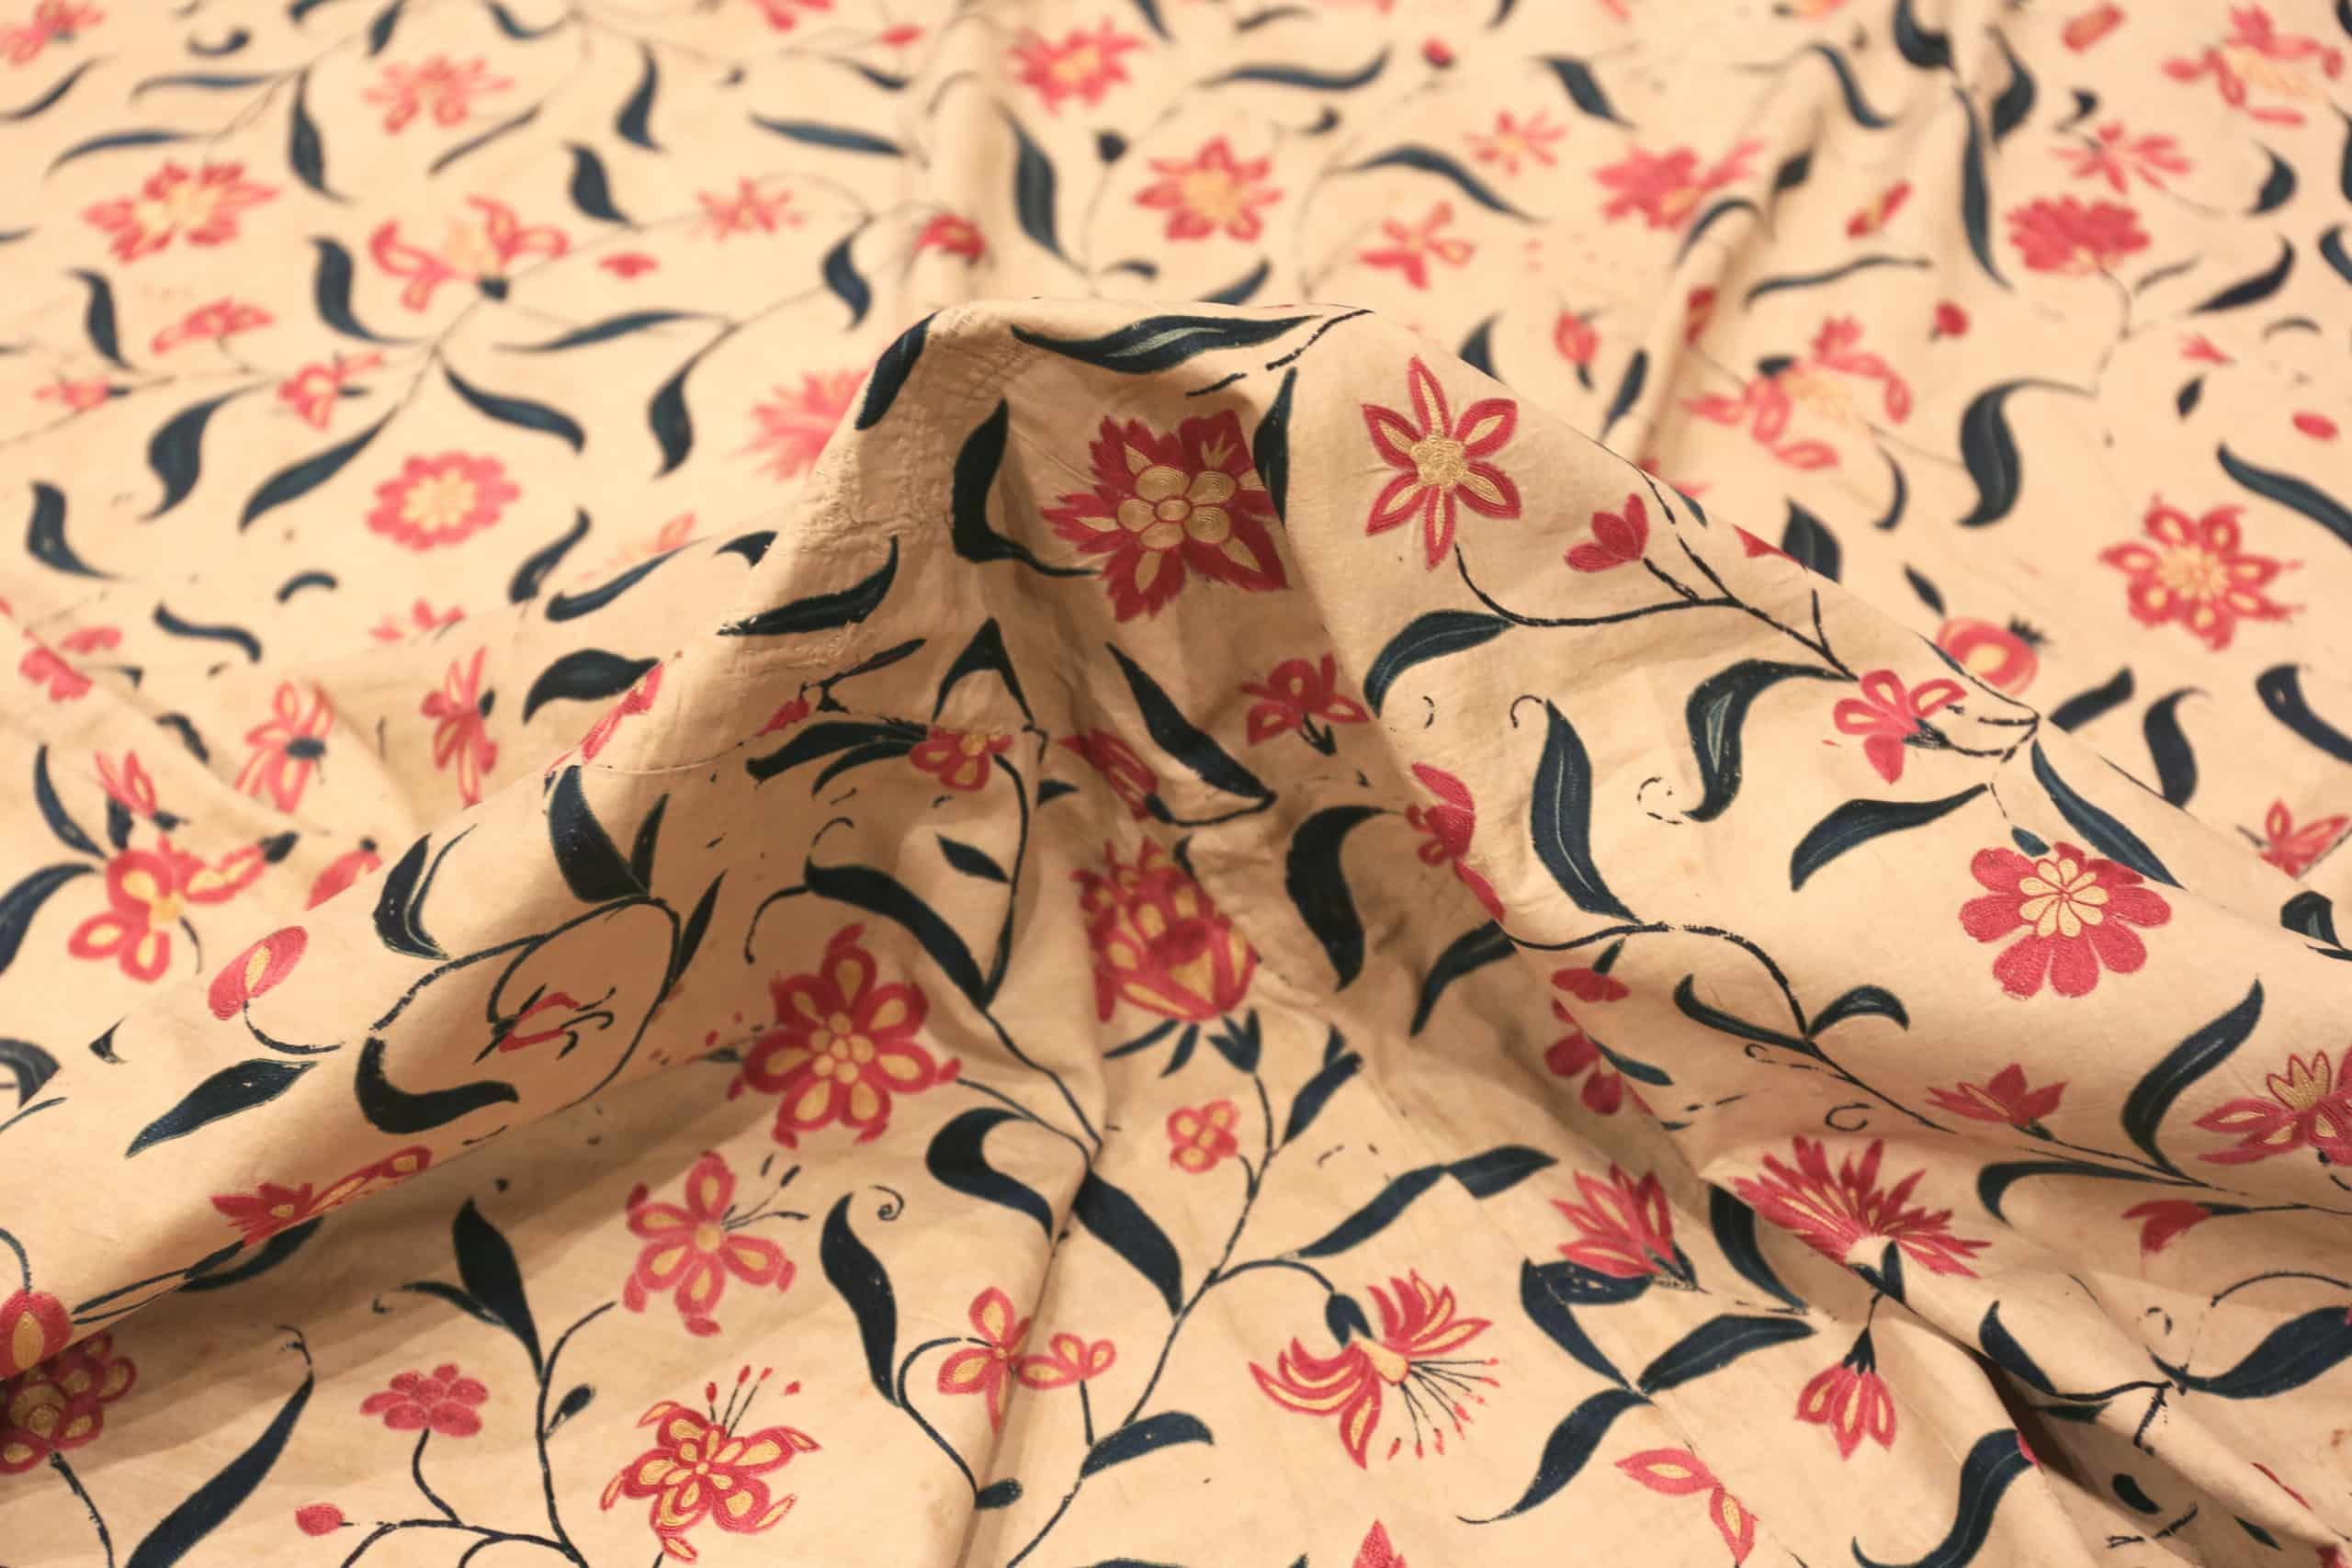 Refined Floral Design Antique Suzani Embroidered Textile 6'10